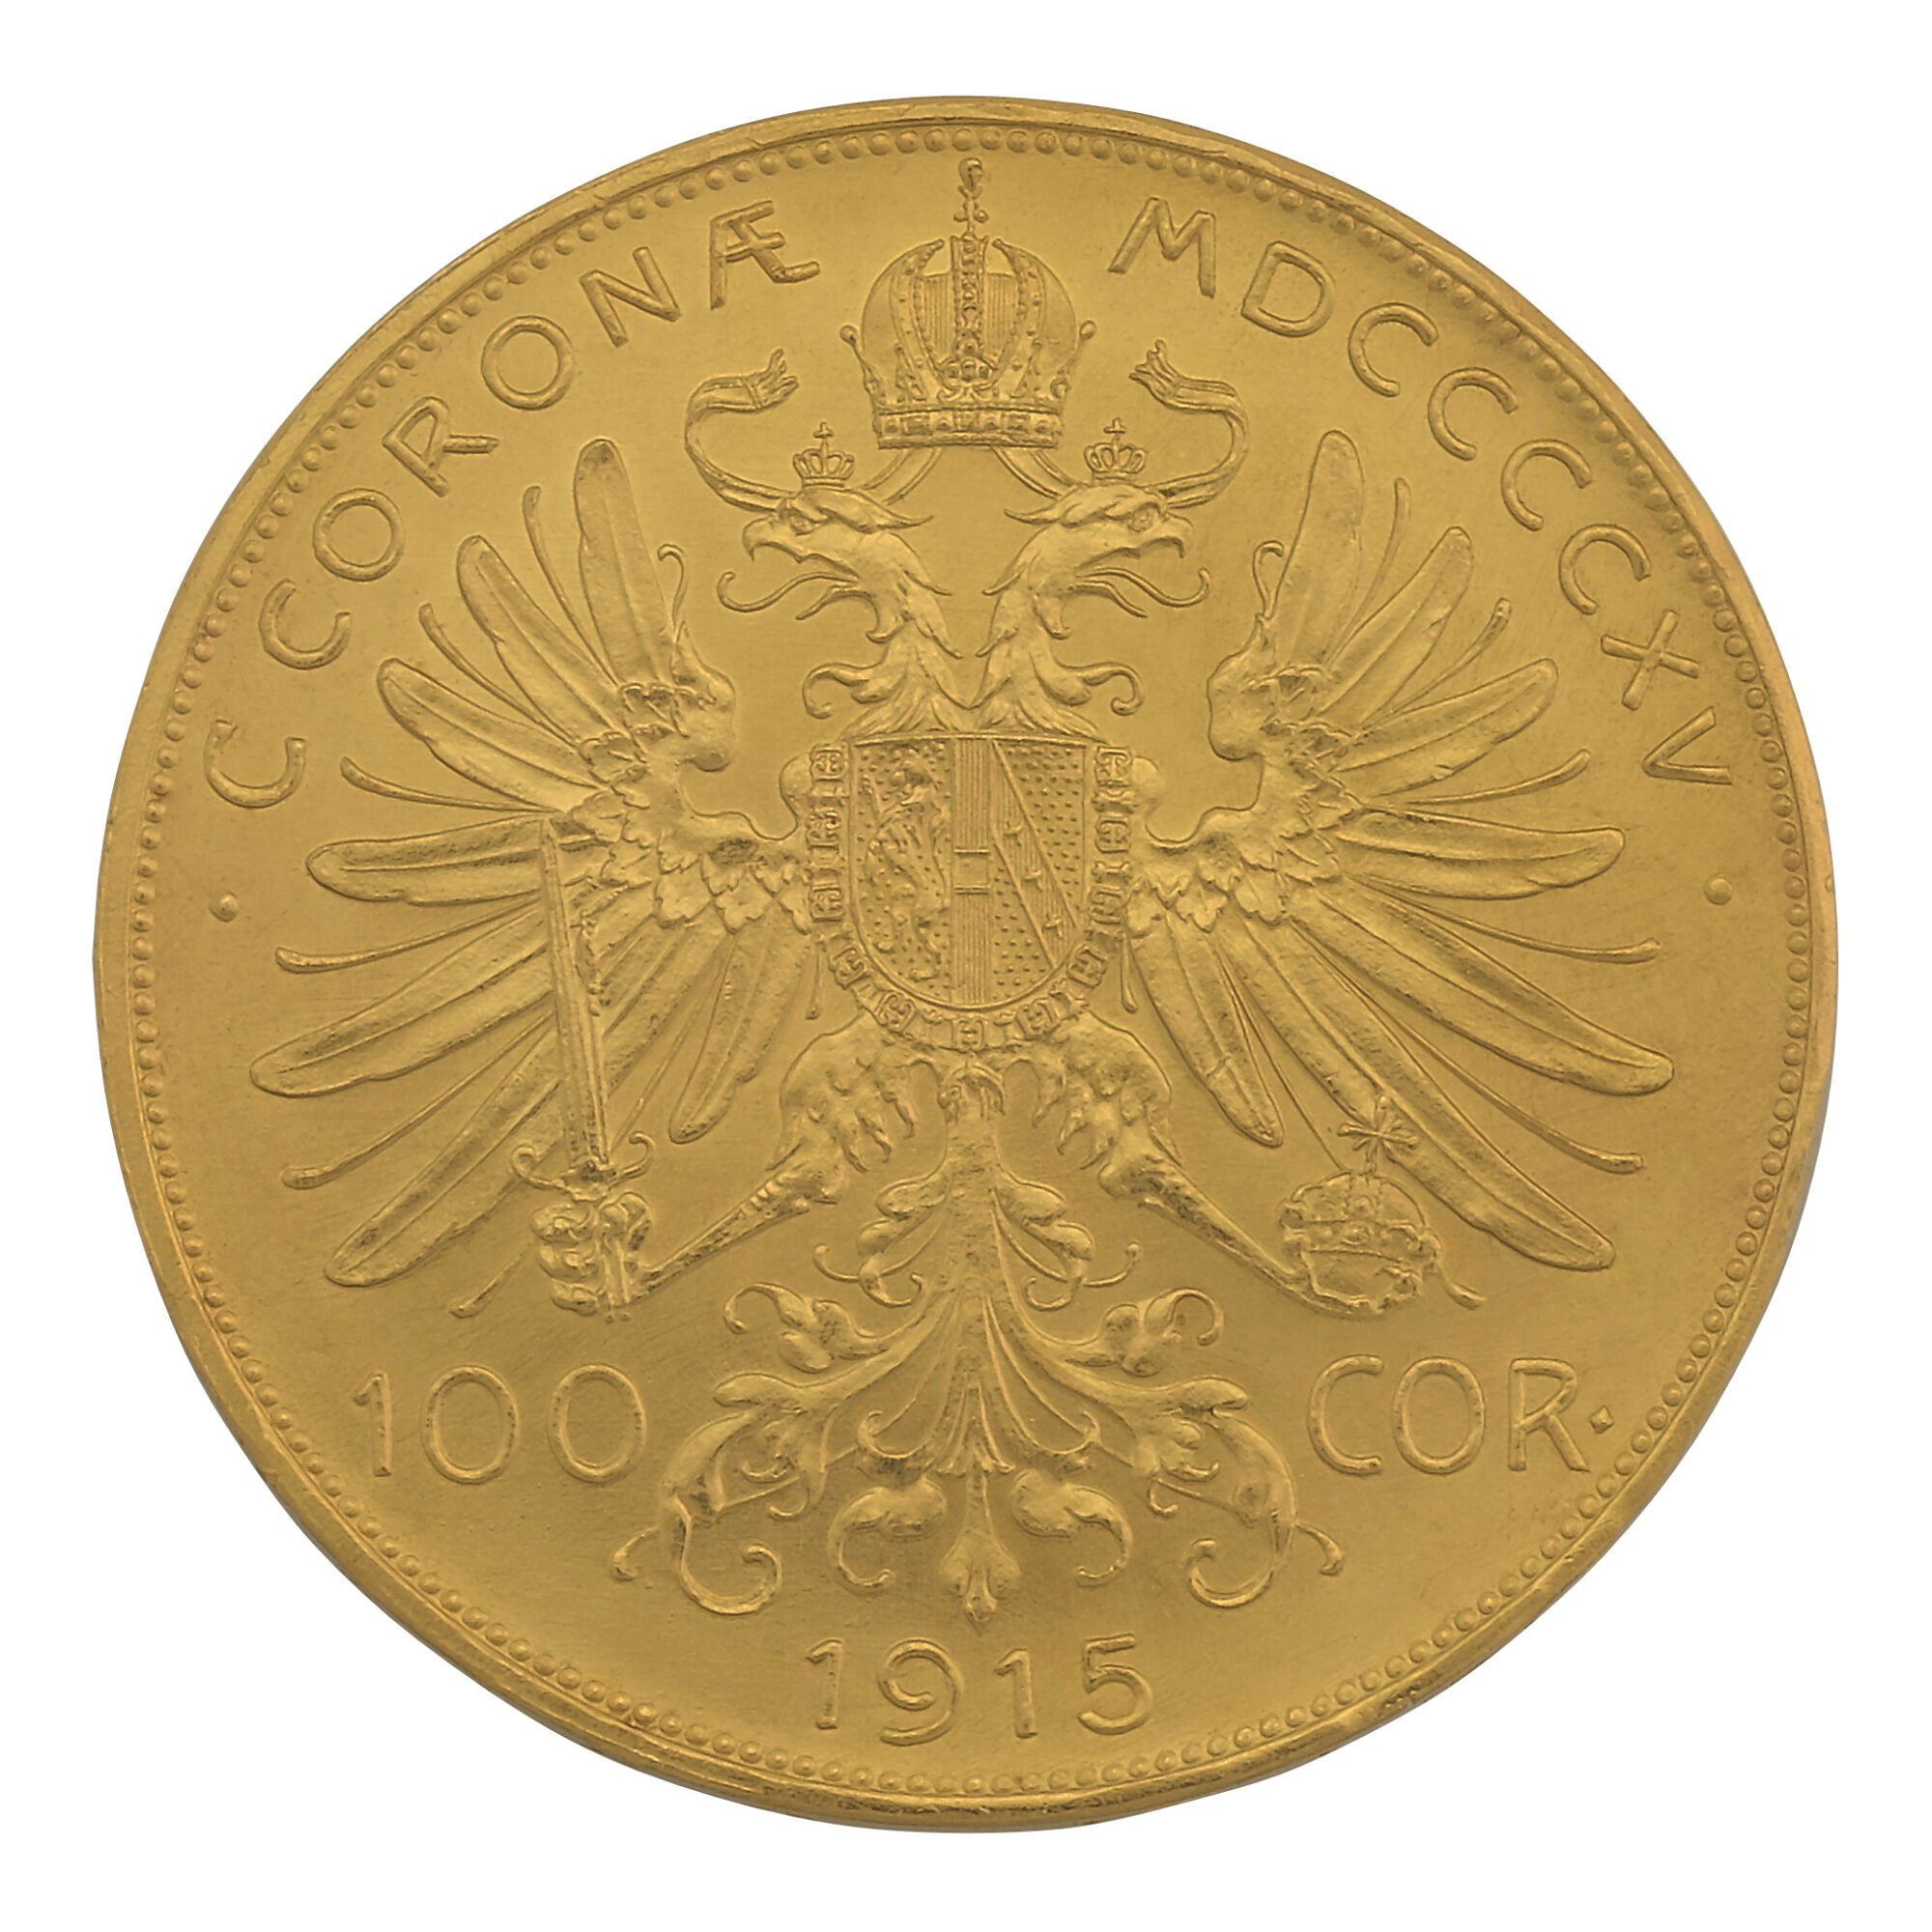 1915 Austrian 100 Coronas Restrike Gold Coin (Best Value)